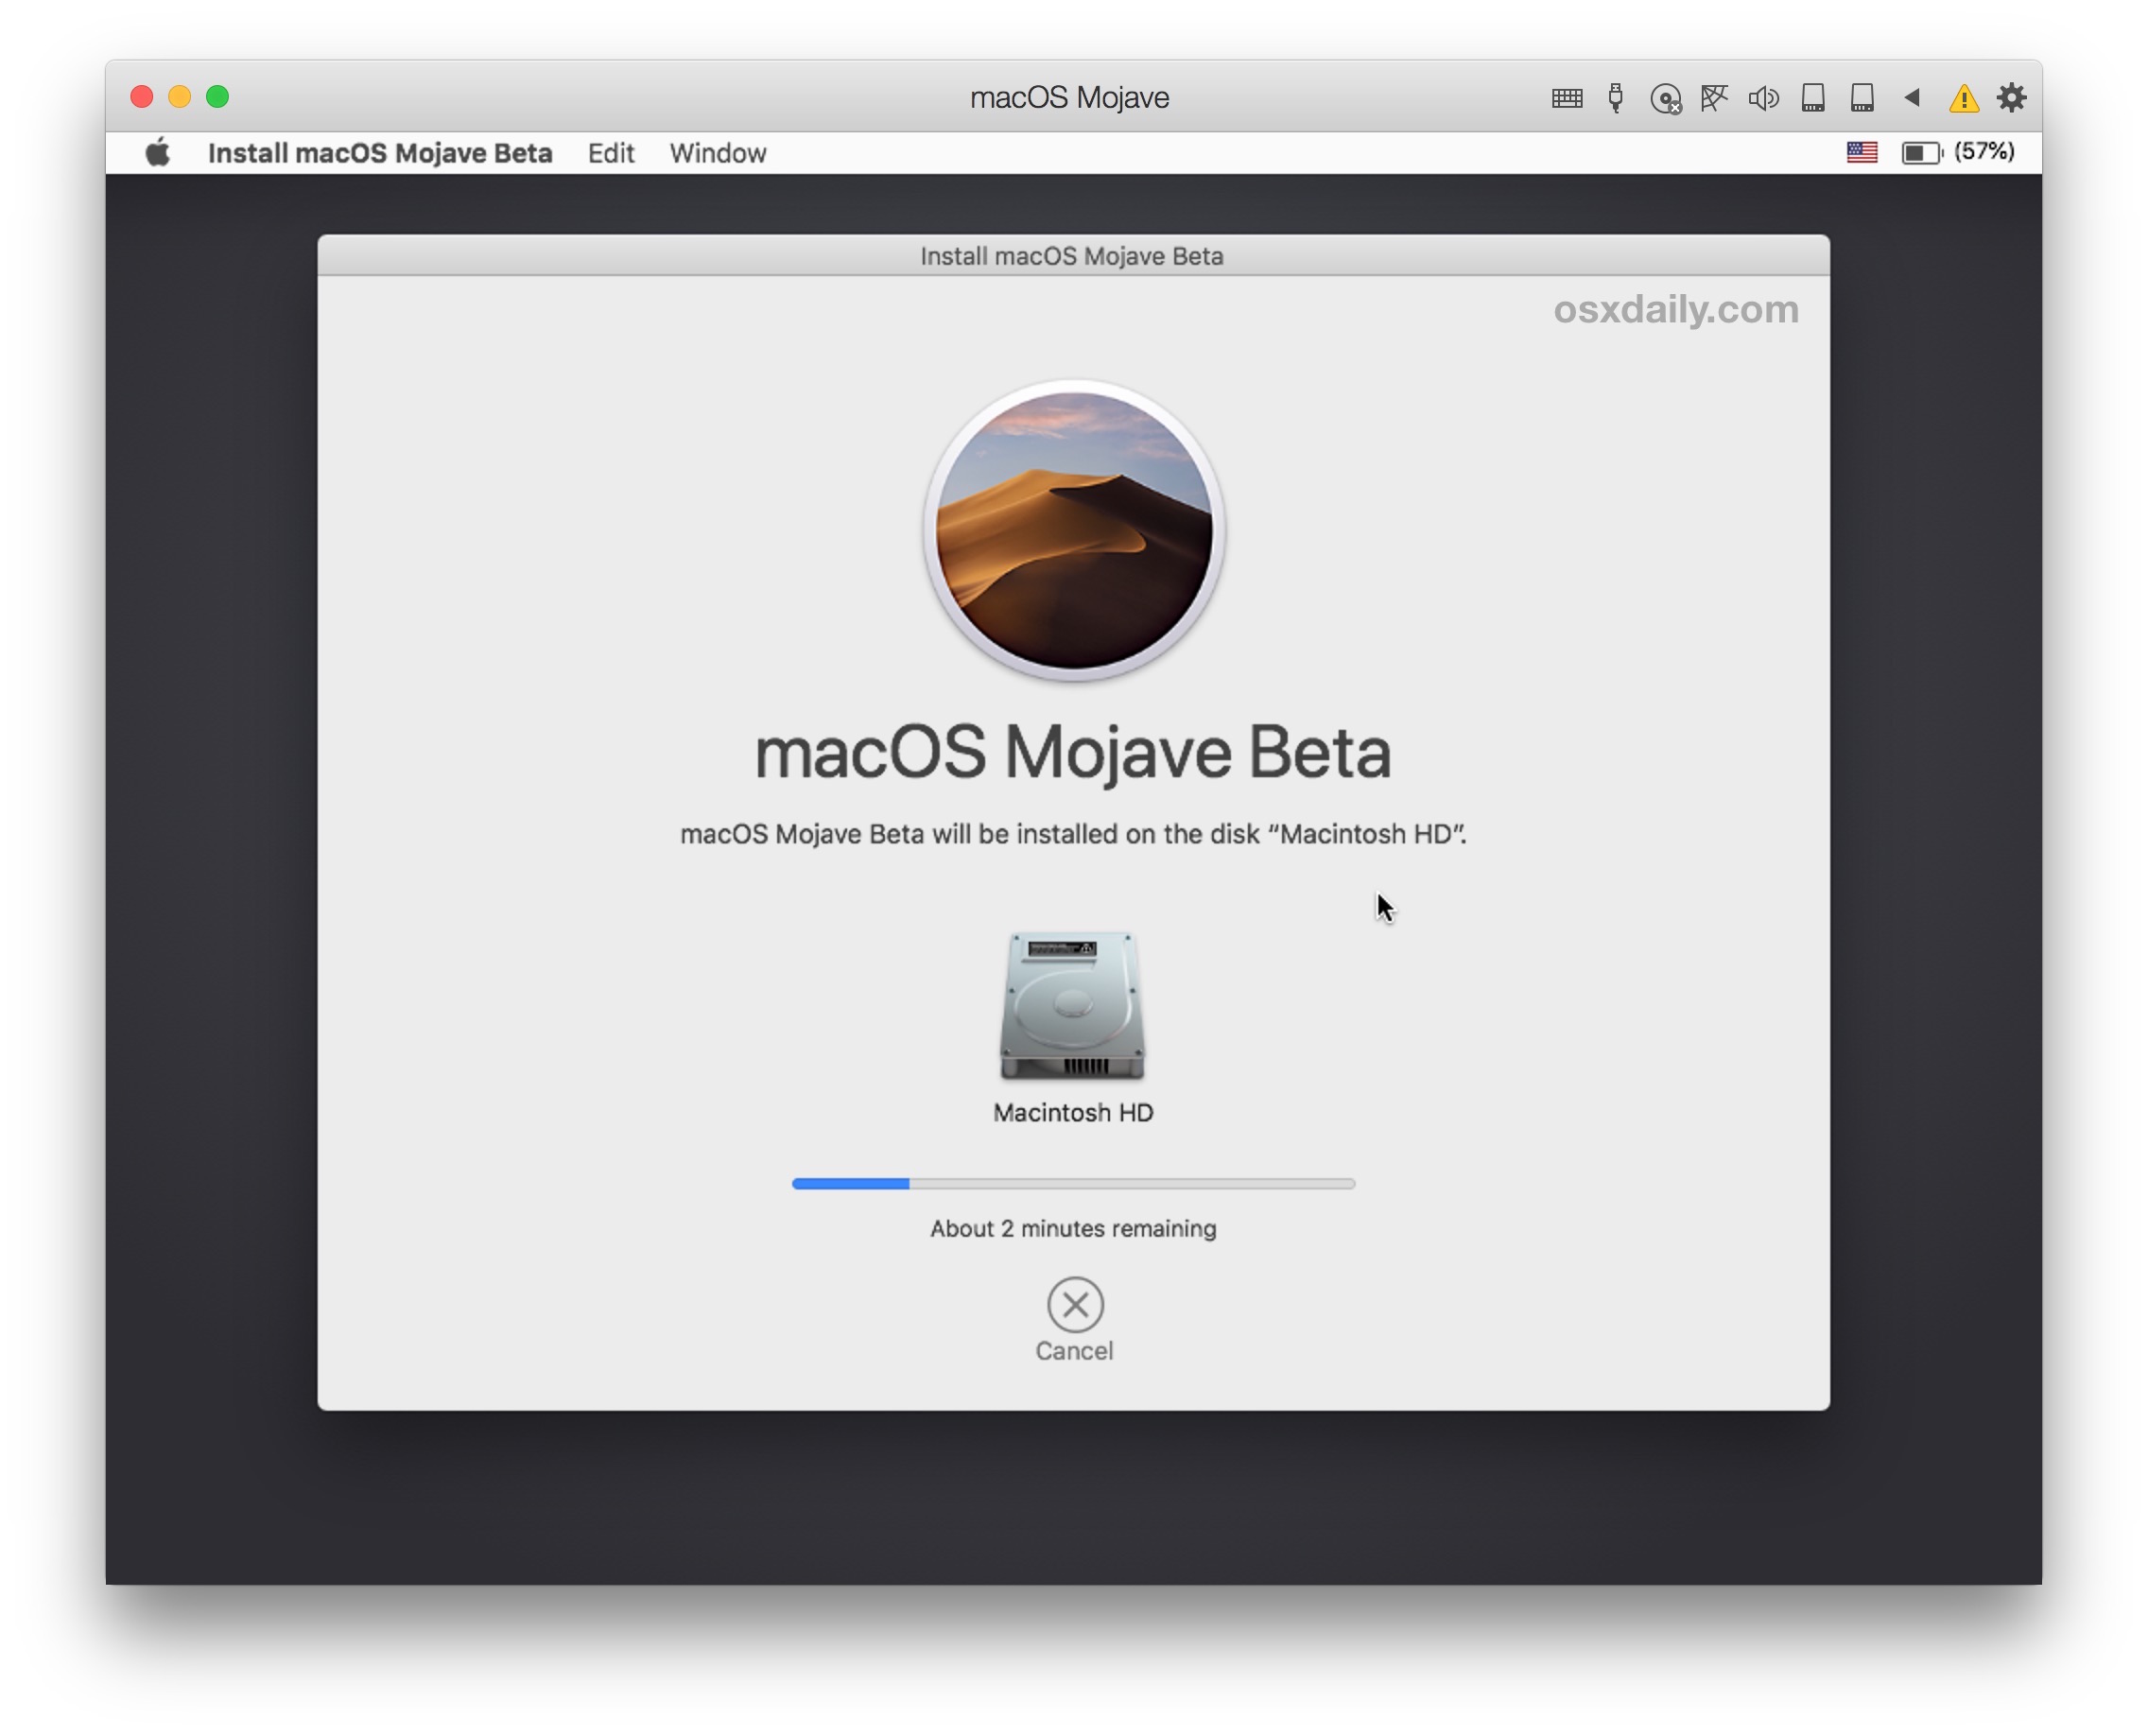 mac mojave hardware requirements